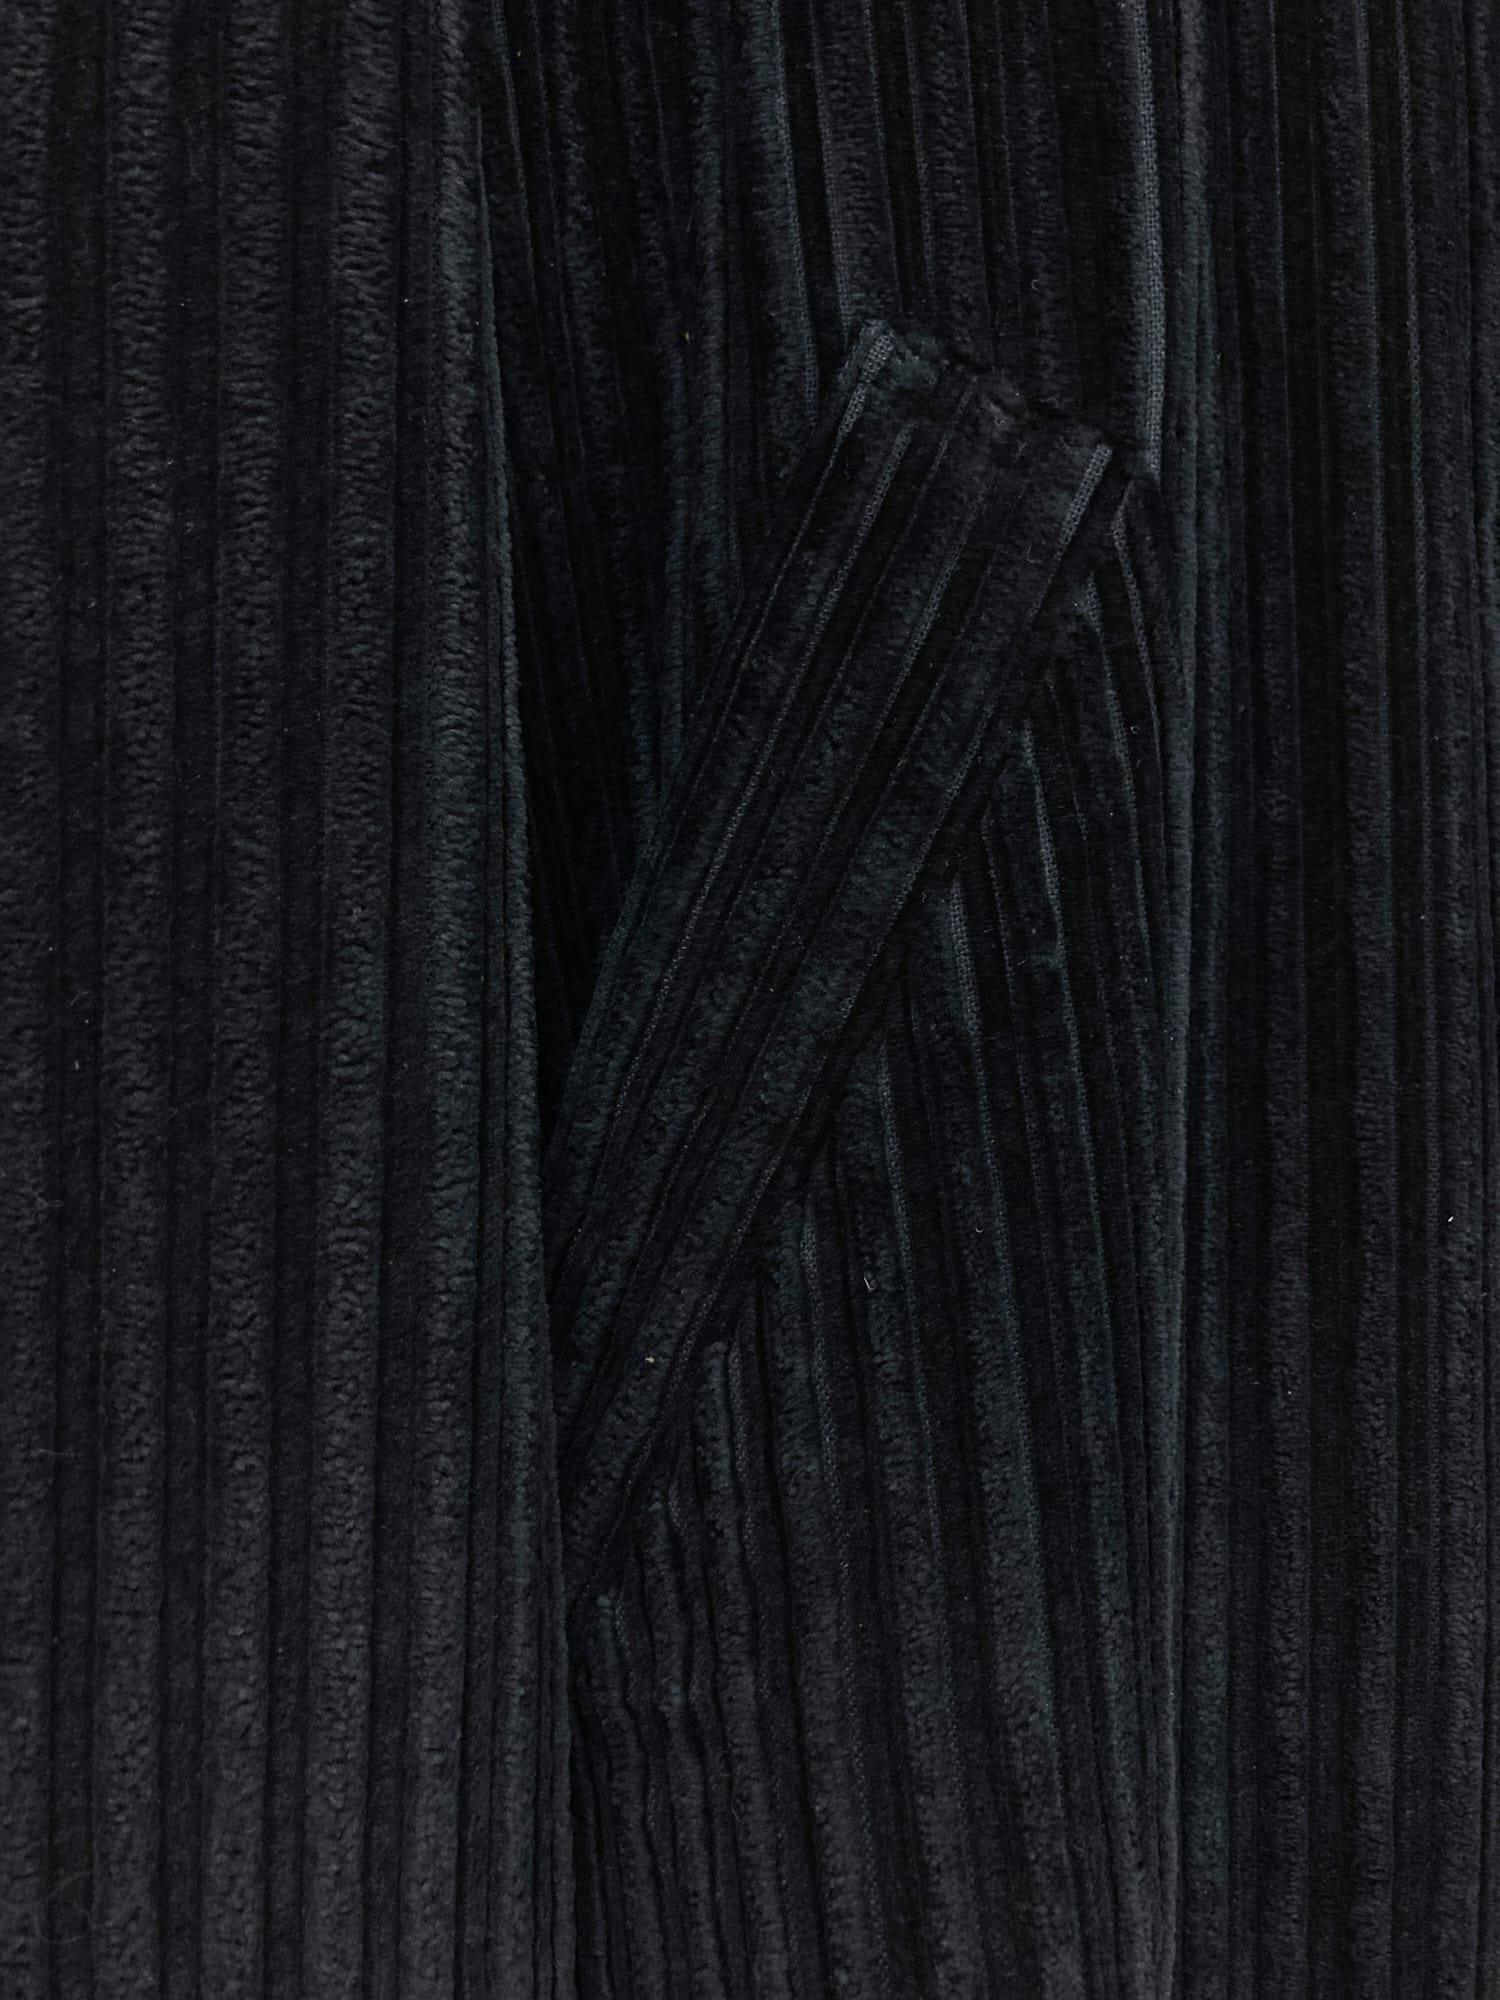 Pashu Shin Hosokawa 1980s black cotton corduroy double breasted coat - M